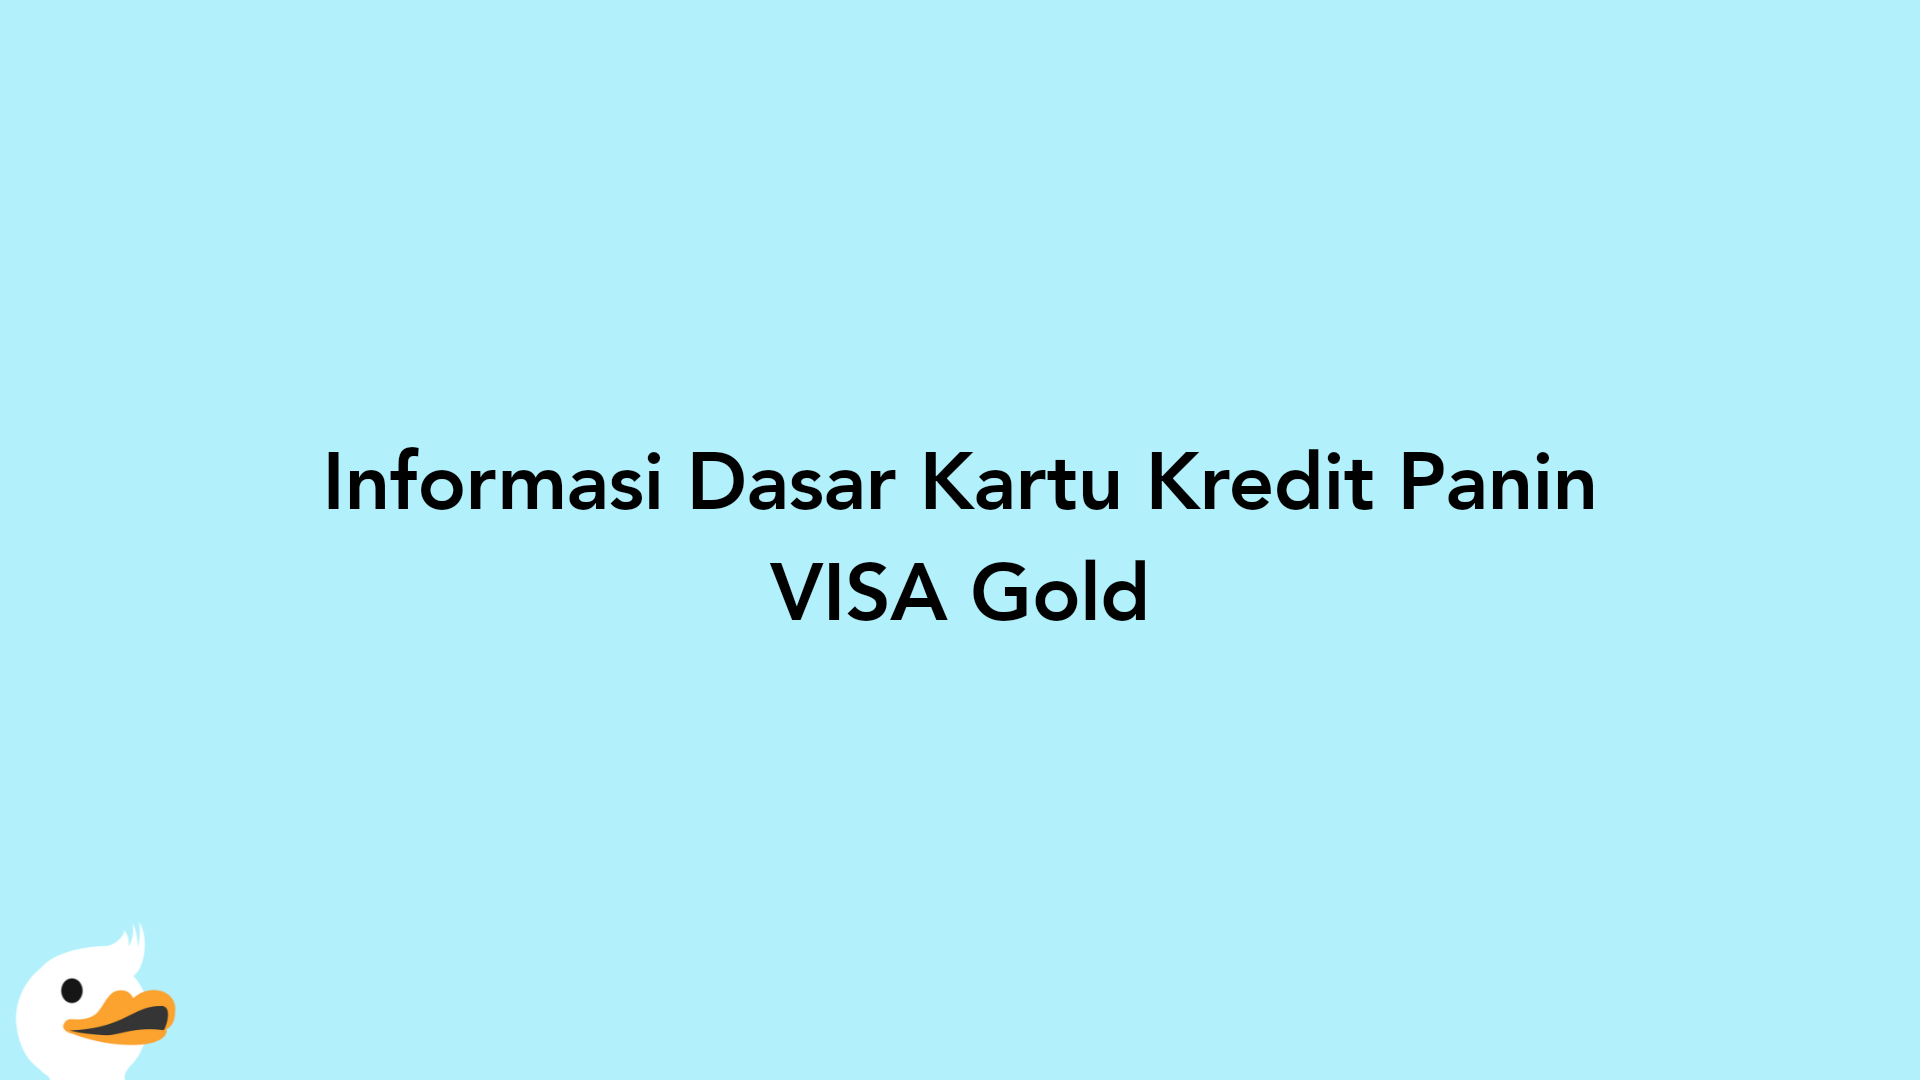 Informasi Dasar Kartu Kredit Panin VISA Gold